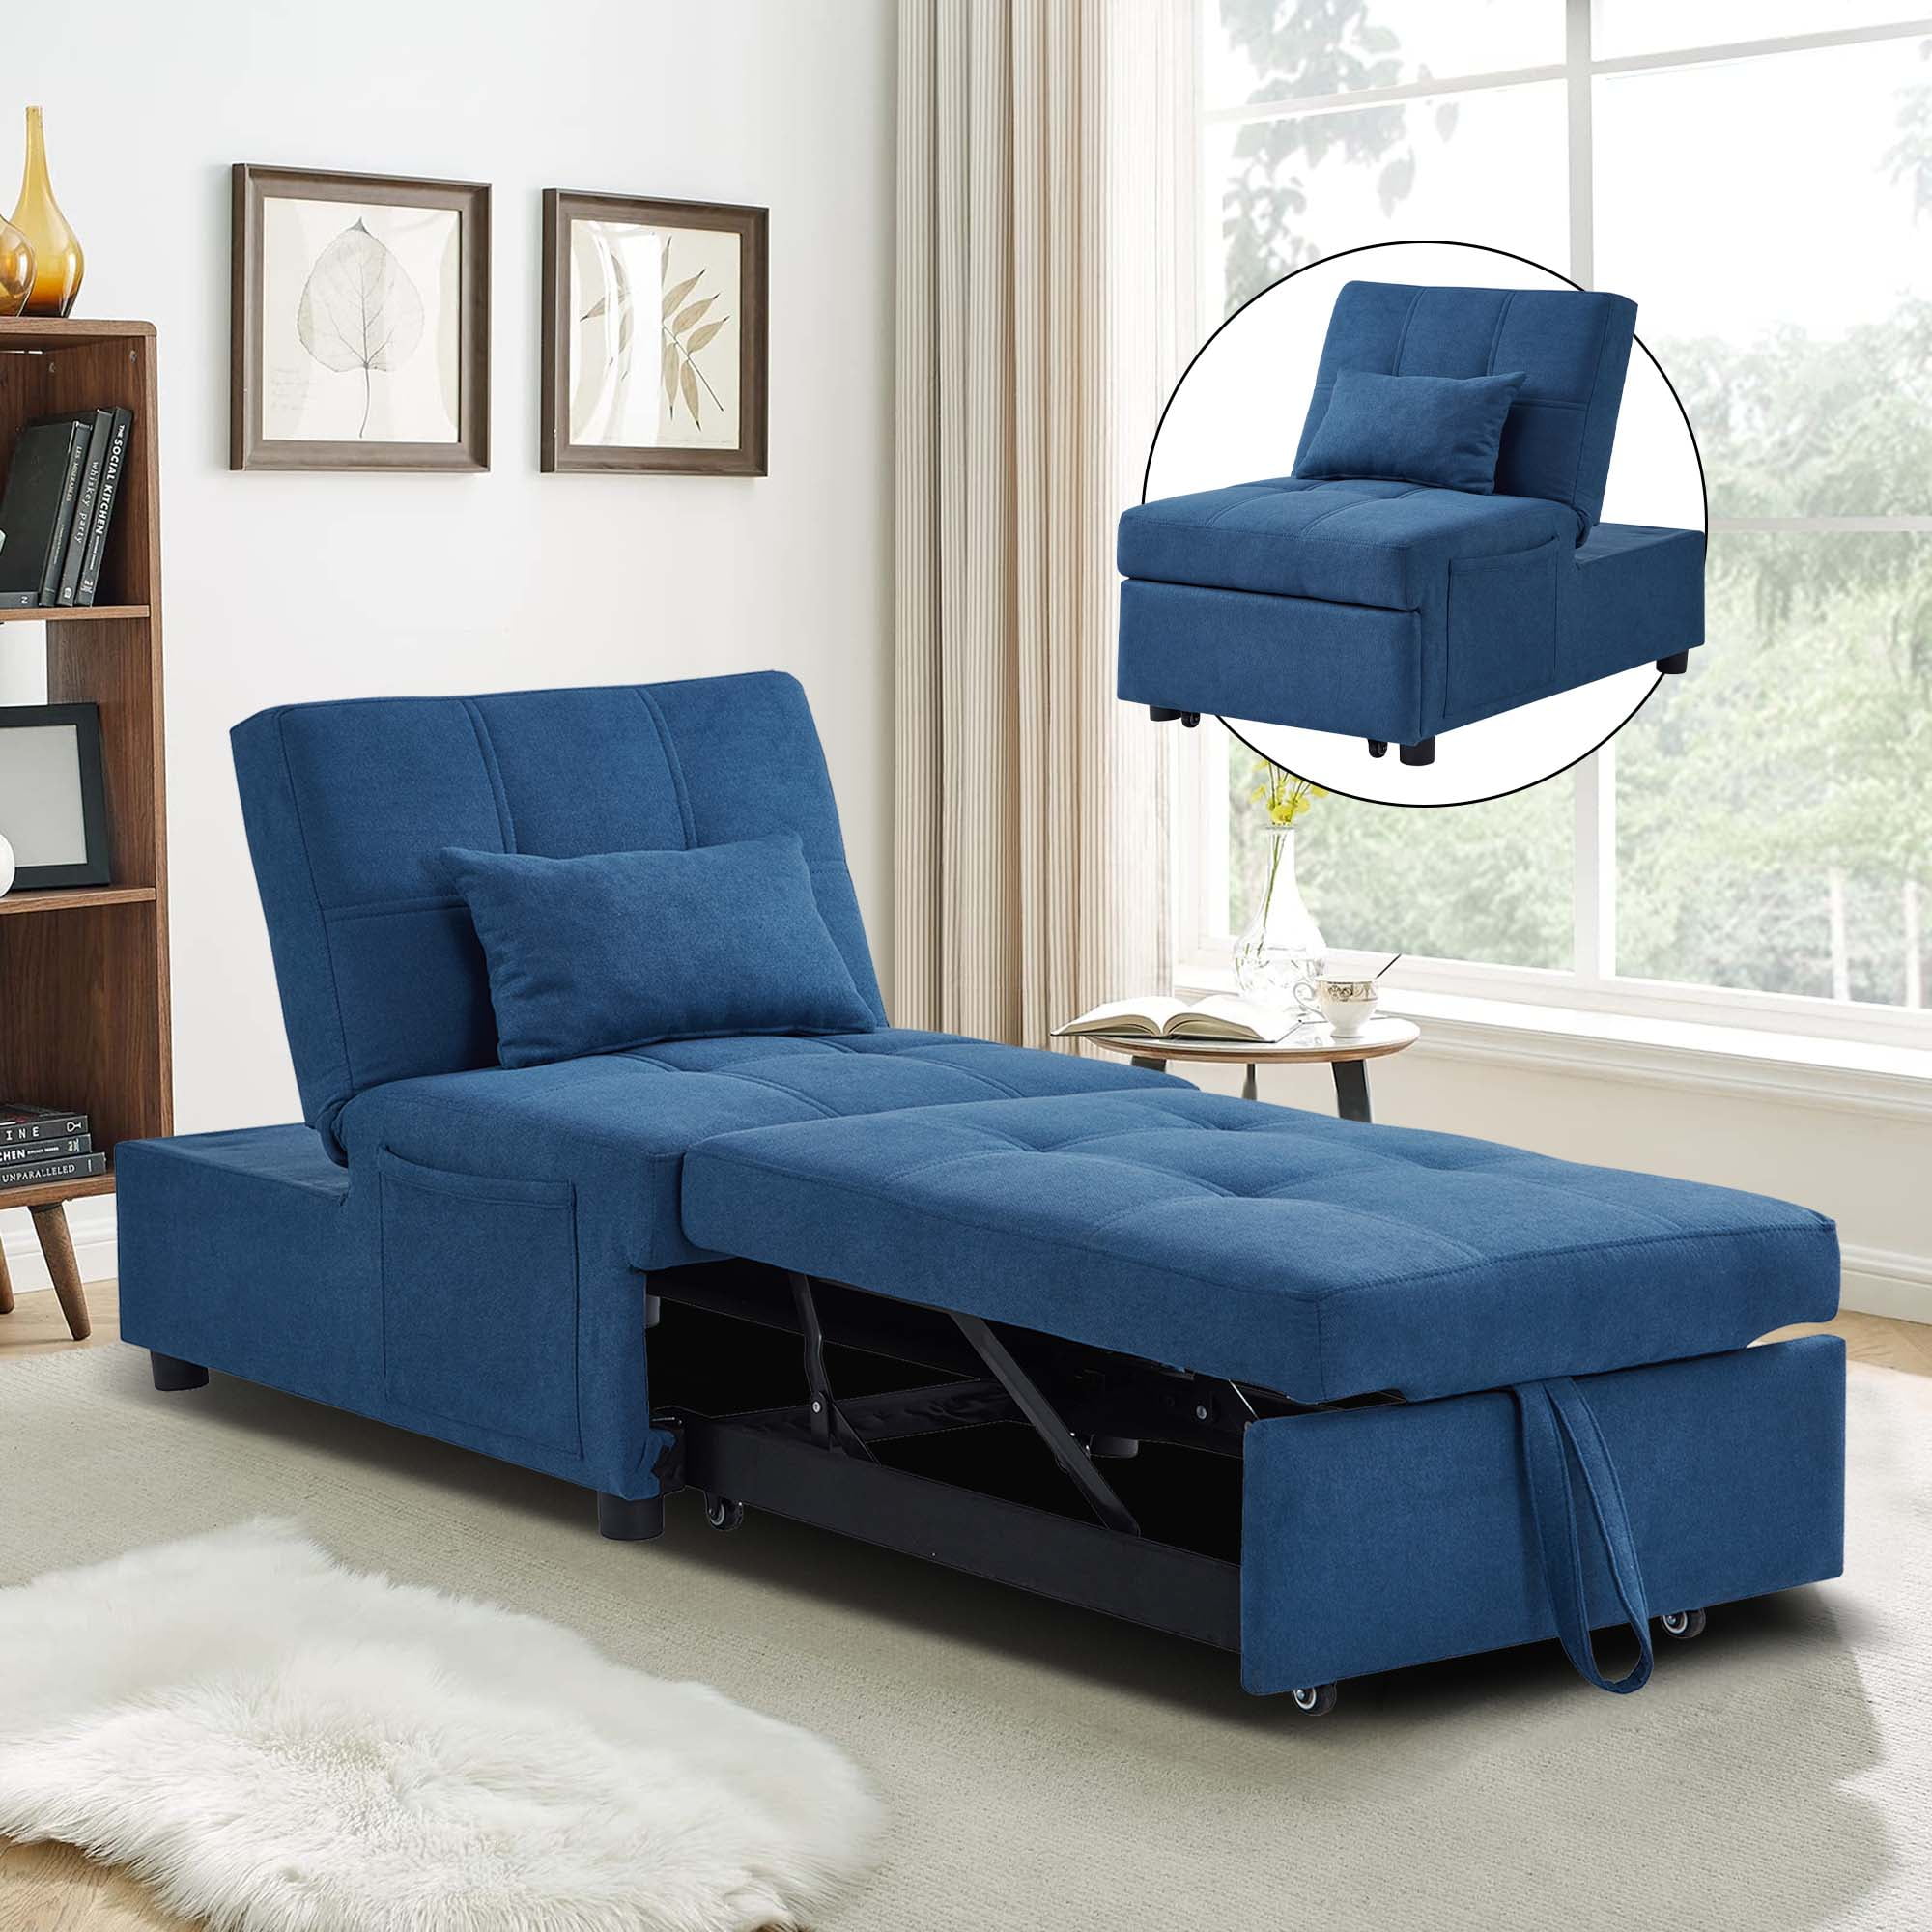 Aukfa Futon Sleeper Chair Bed, Convertible Pull Out Sleeper Sofa Chair ...